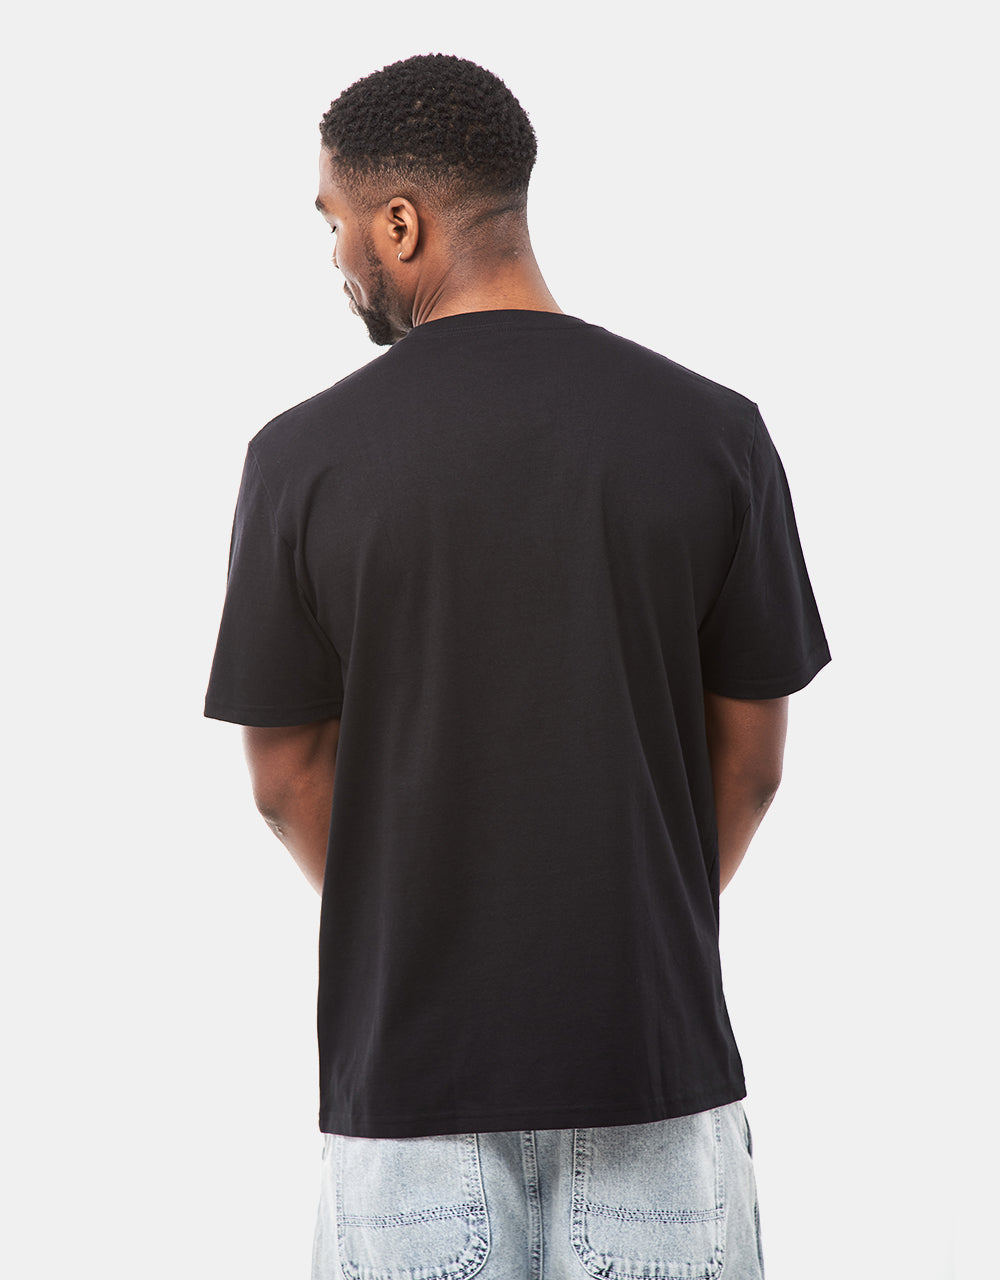 Volcom x Max Sherman T-Shirt - Black